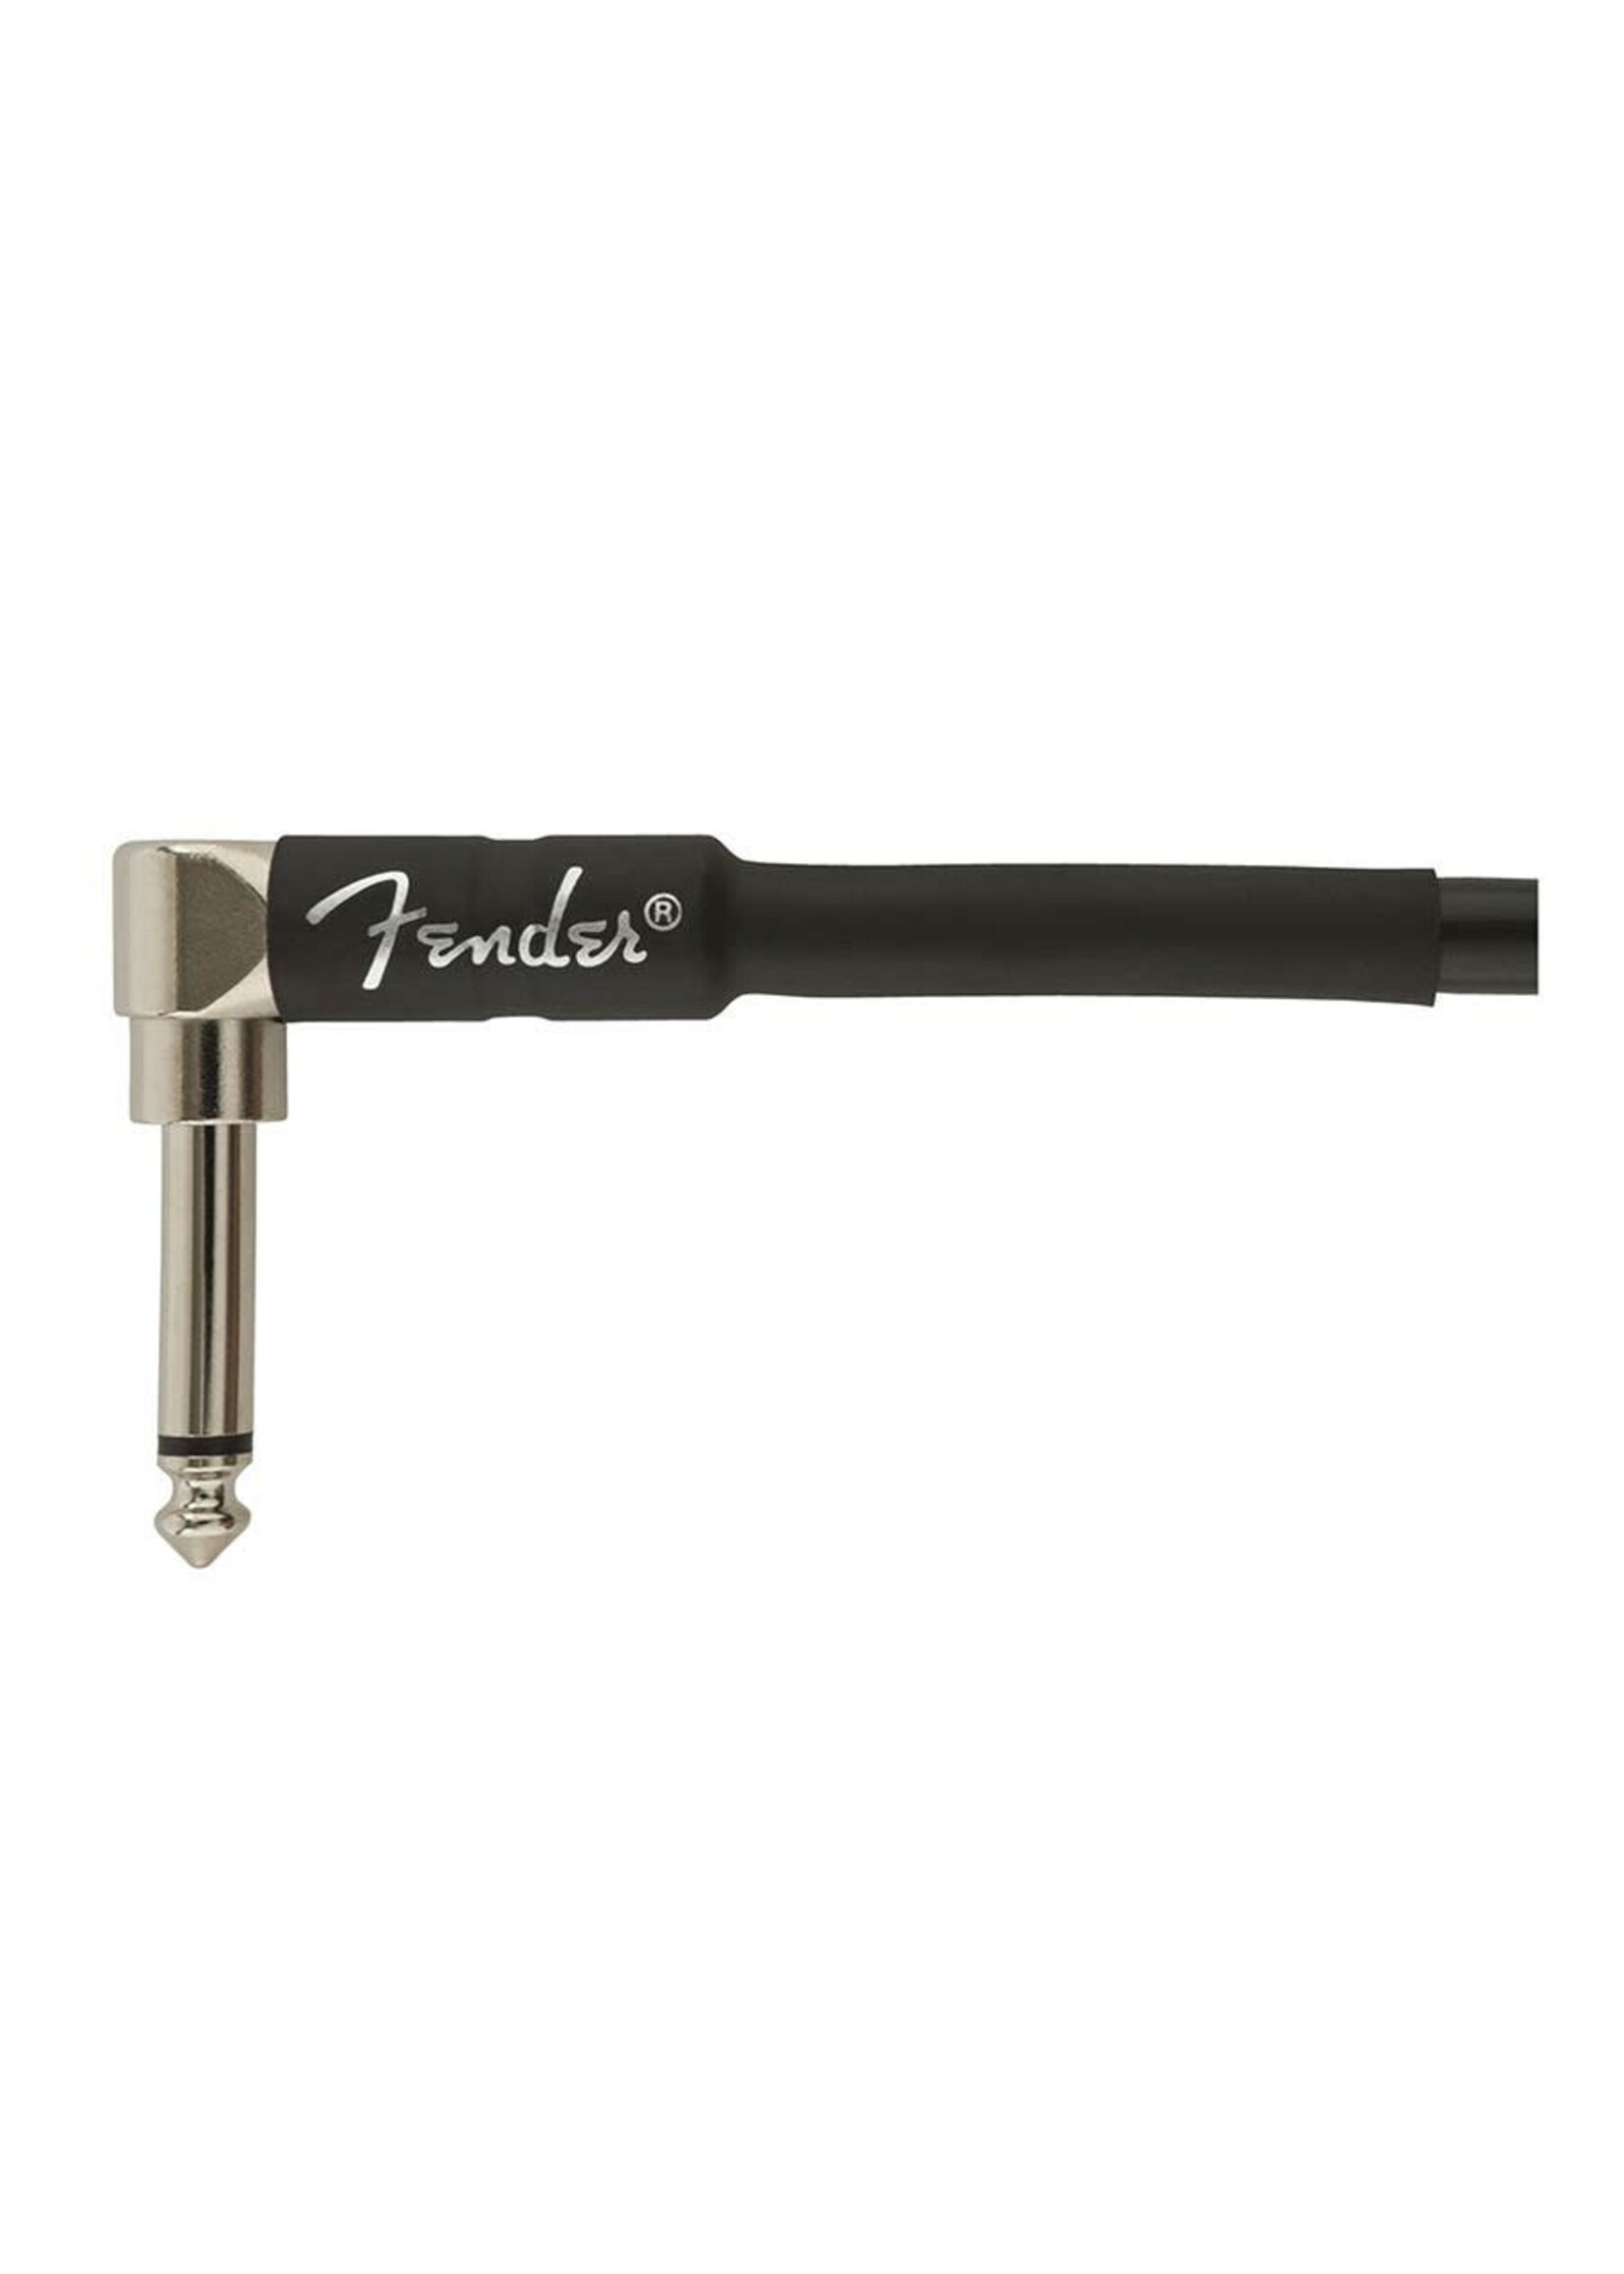 Fender Fender professional series cable 15ft. black